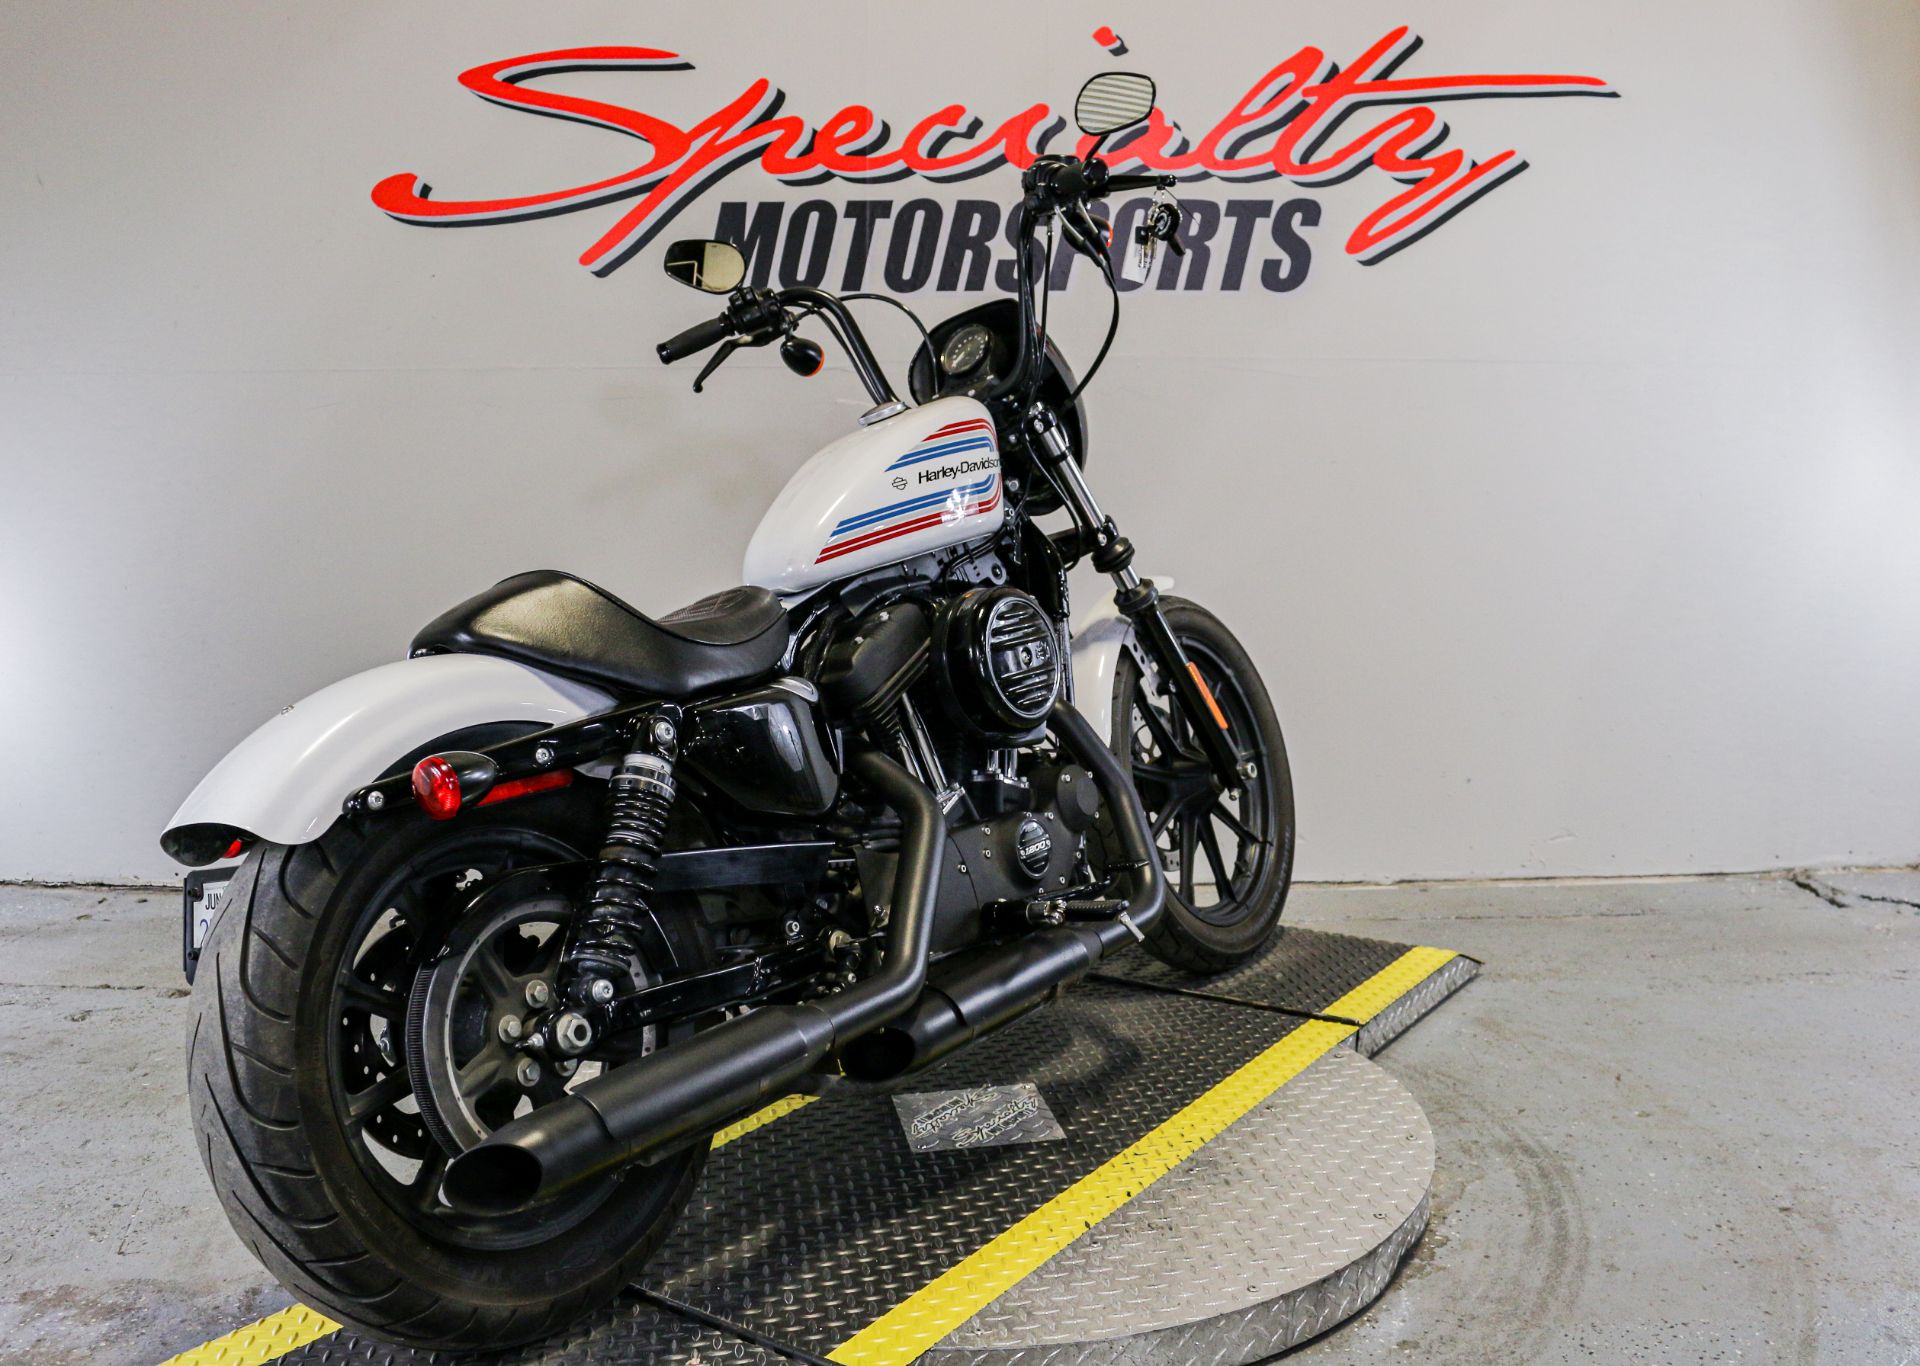 2021 Harley-Davidson Iron 1200™ in Sacramento, California - Photo 2